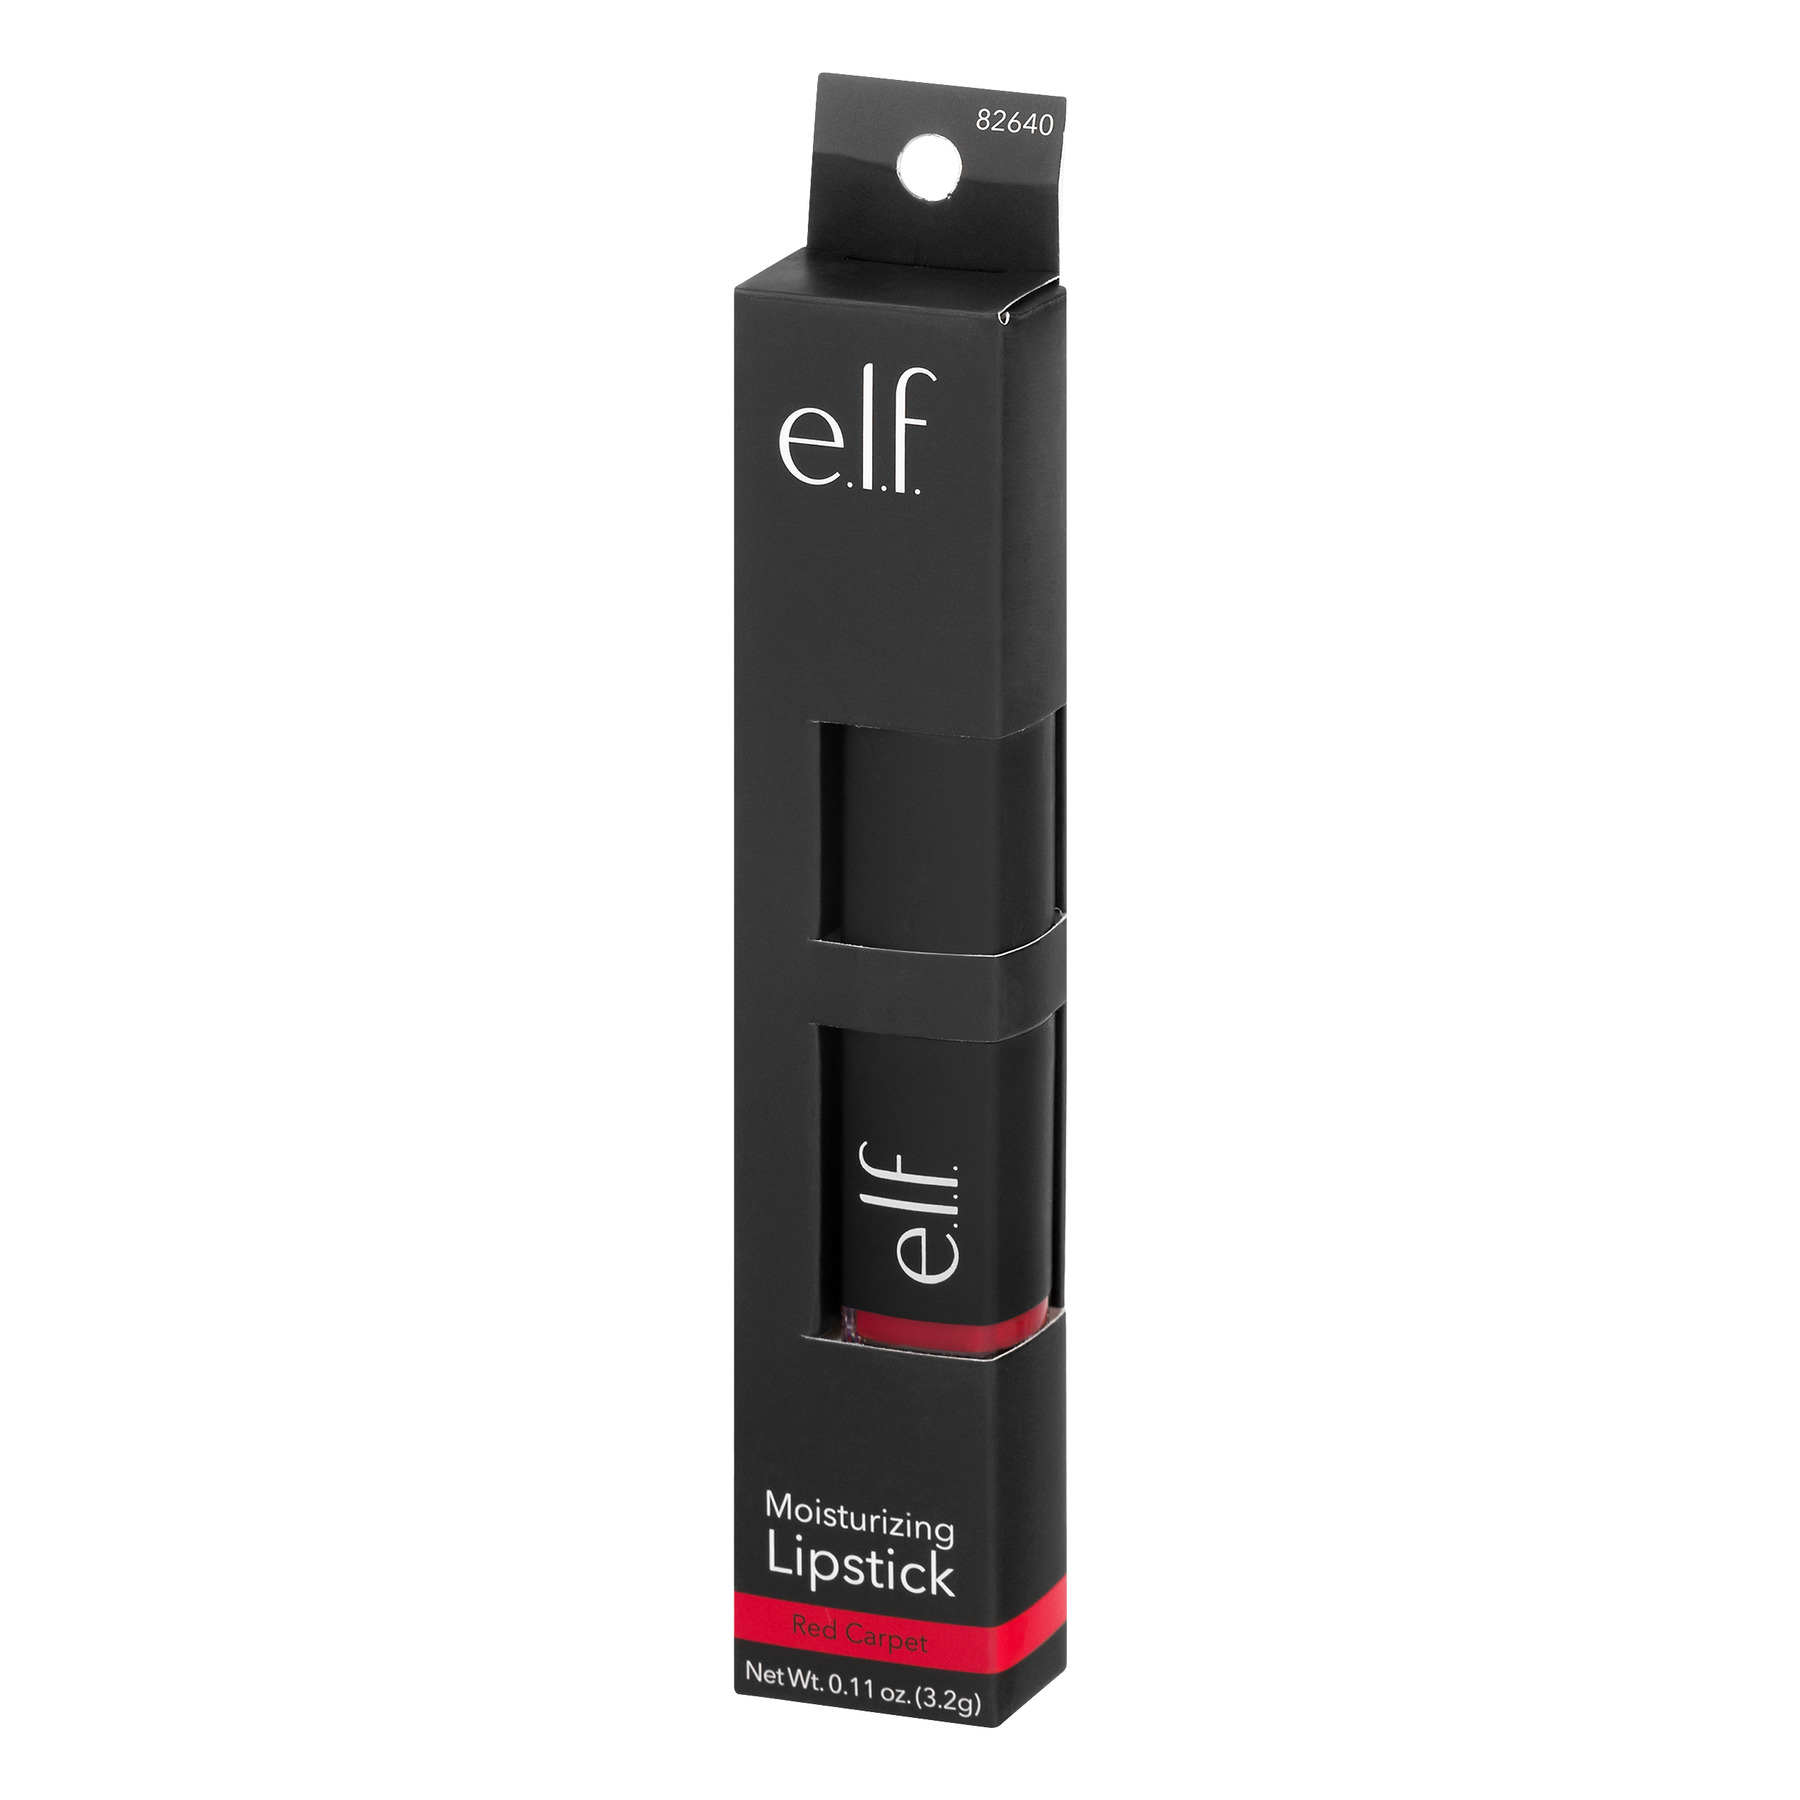 e.l.f. Moisturizing Lipstick, Red Carpet, 0.11 oz - image 3 of 5